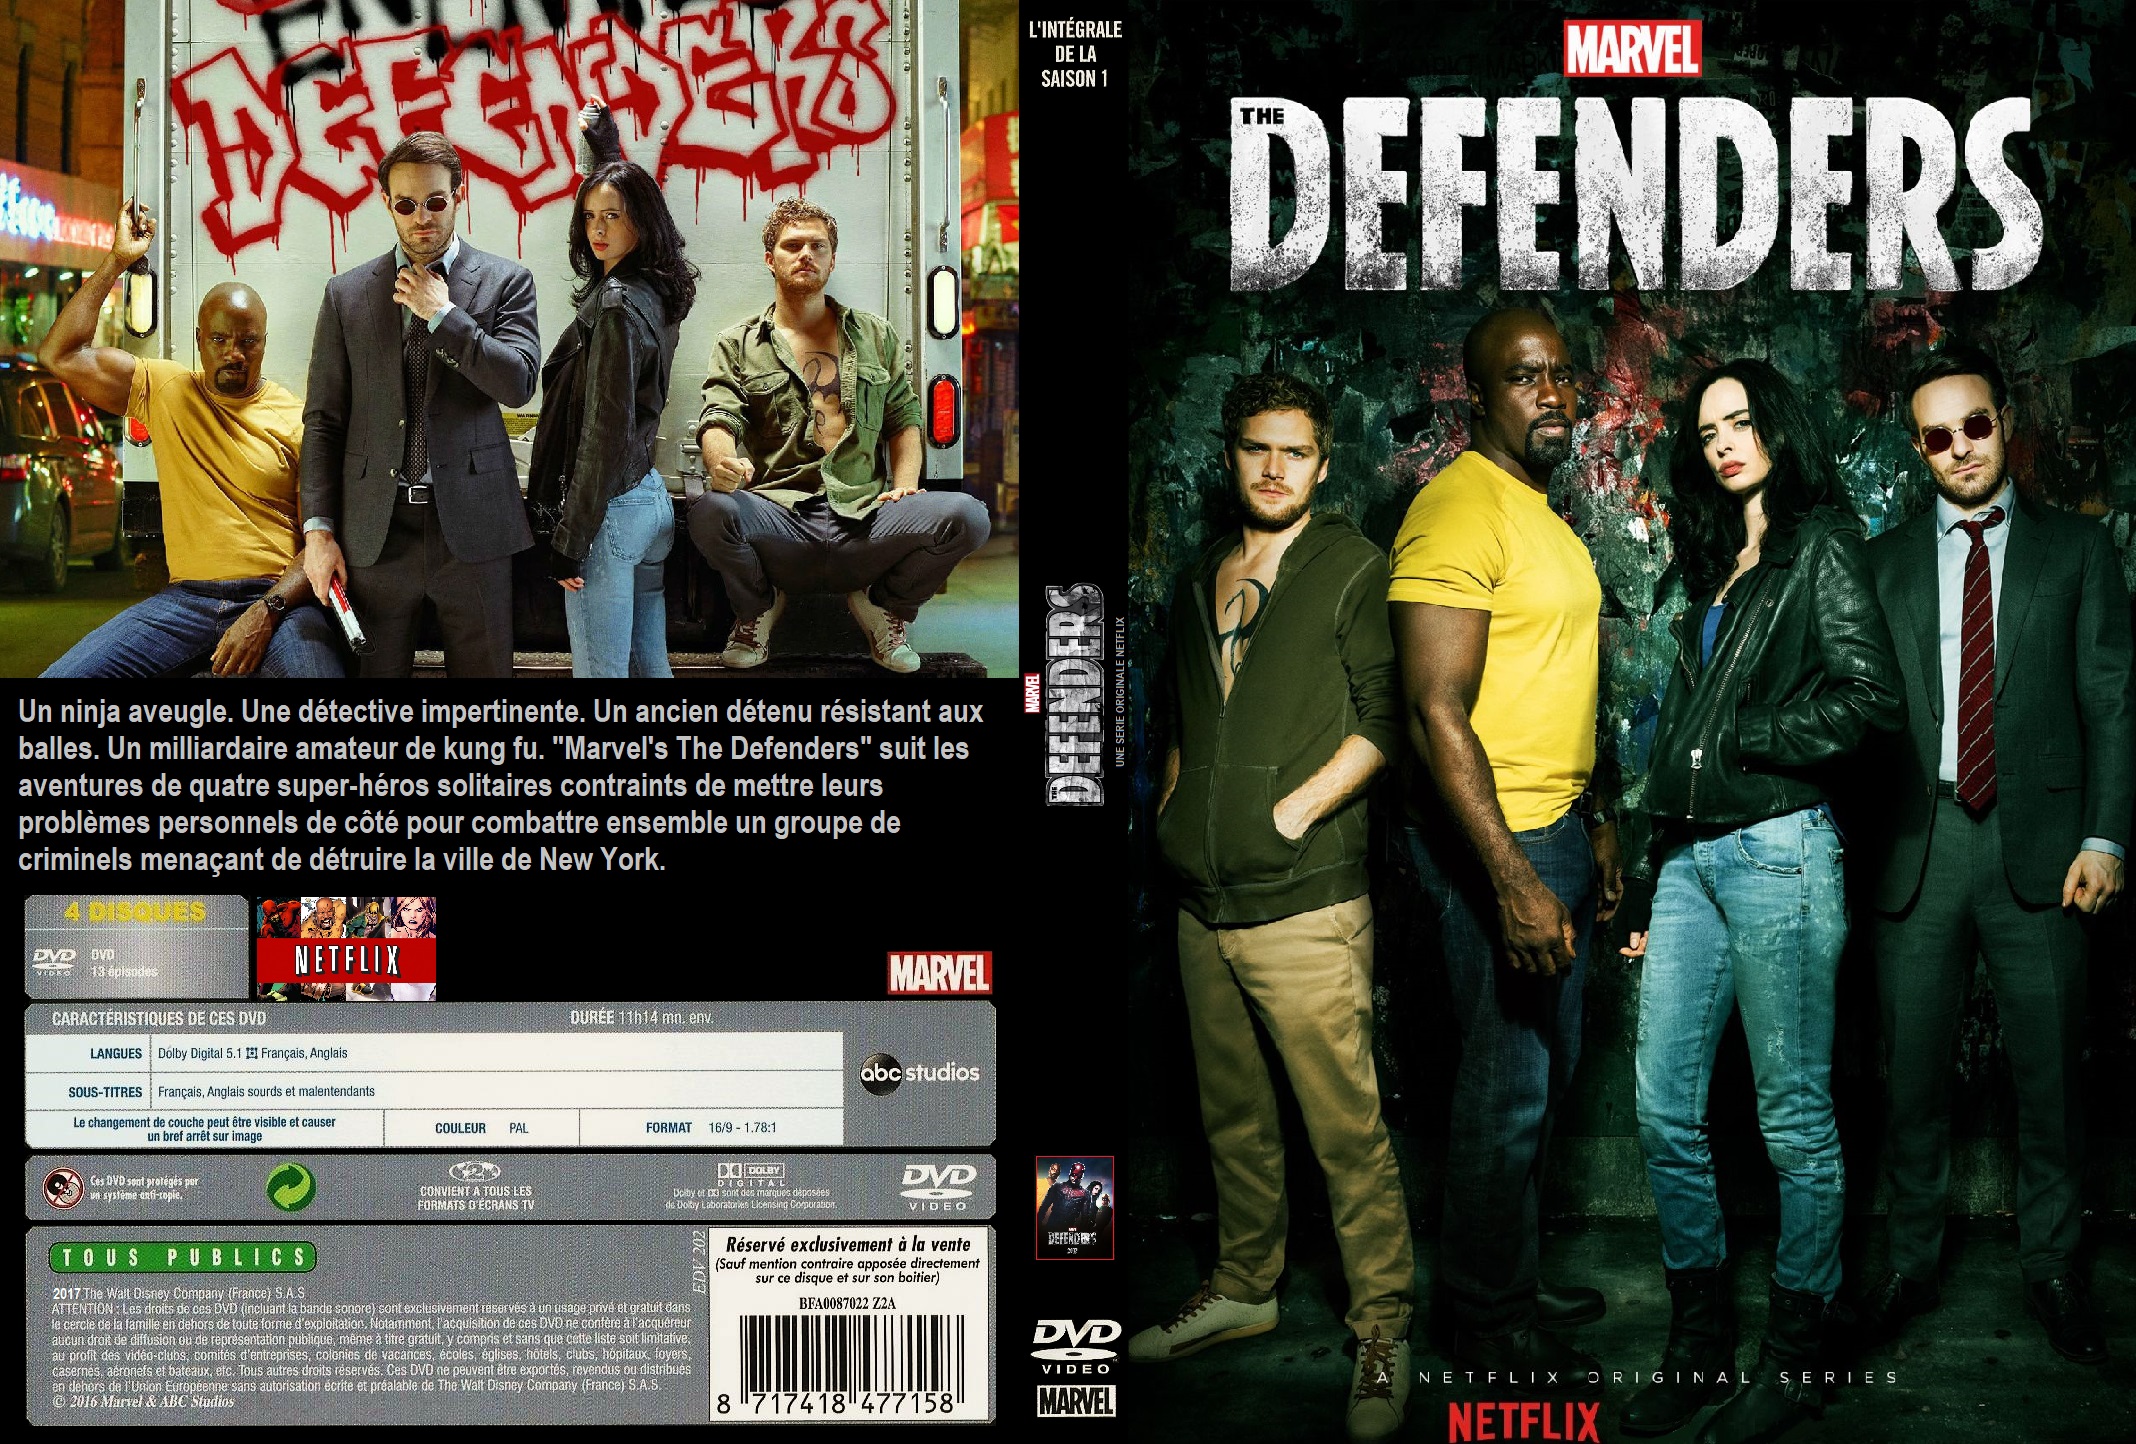 Jaquette DVD The Defenders saison 1 custom